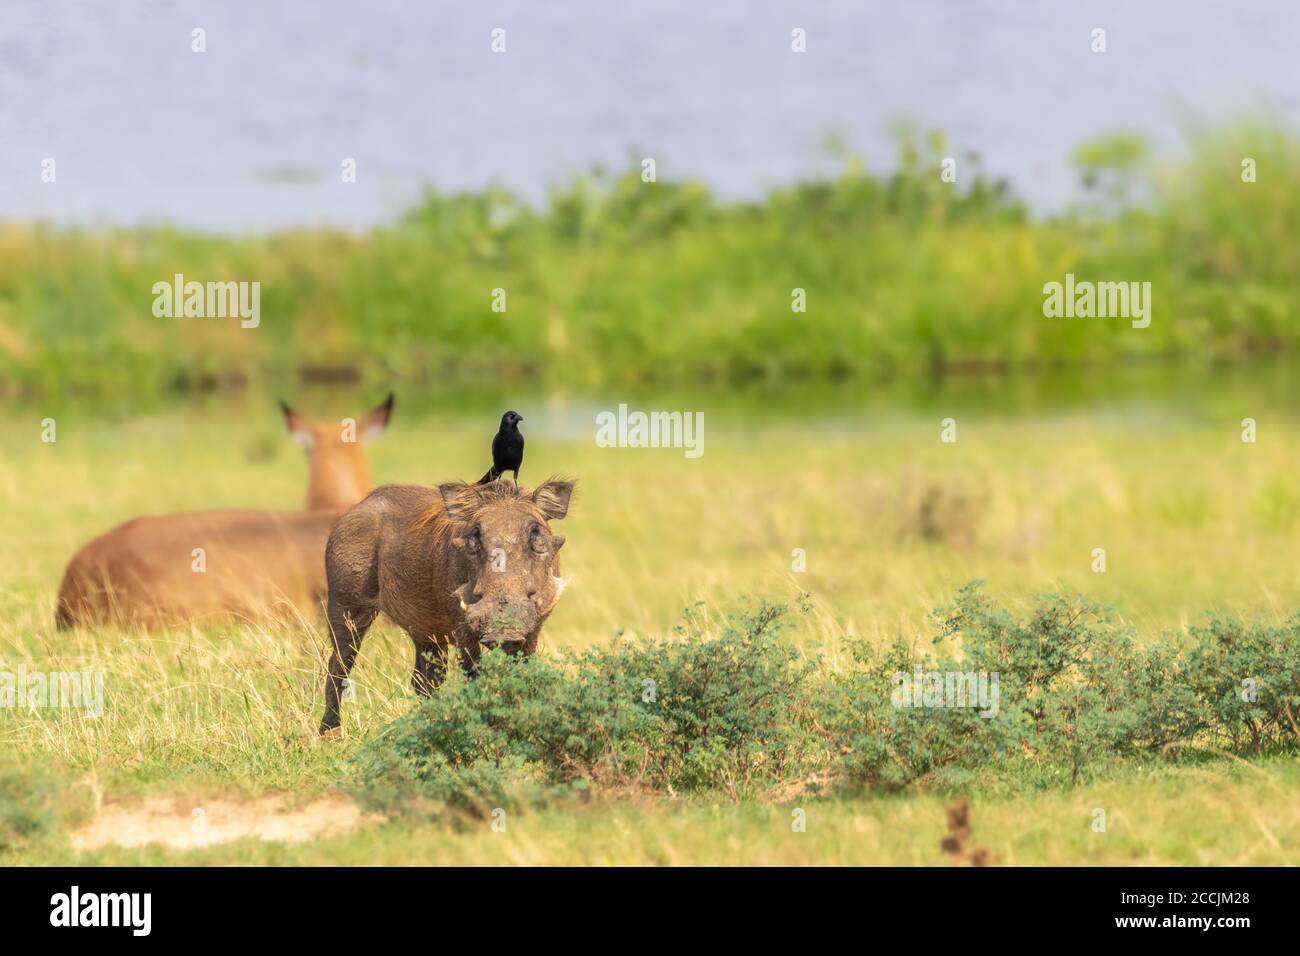 A warthog (Phacochoerus africanus) looking at the camera, Murchison Falls National Park, Uganda. Stock Photo